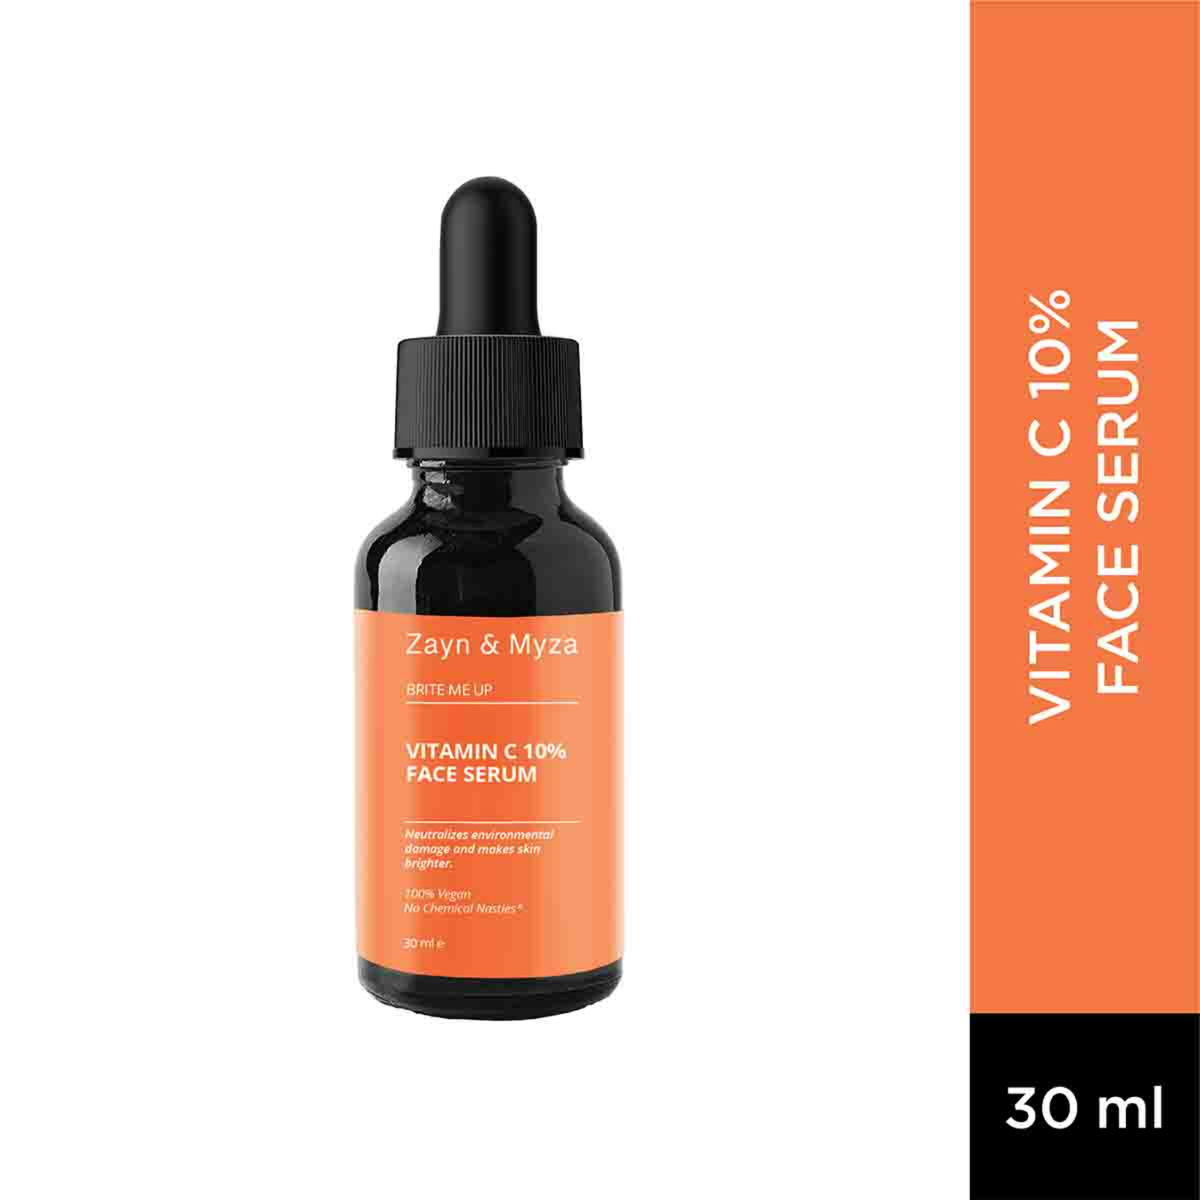 Zayn & Myza Brite Me Up Vitamin C 10% Face Serum, Neutralizes Environmental Damage and Makes Skin Brighter, 30 ml